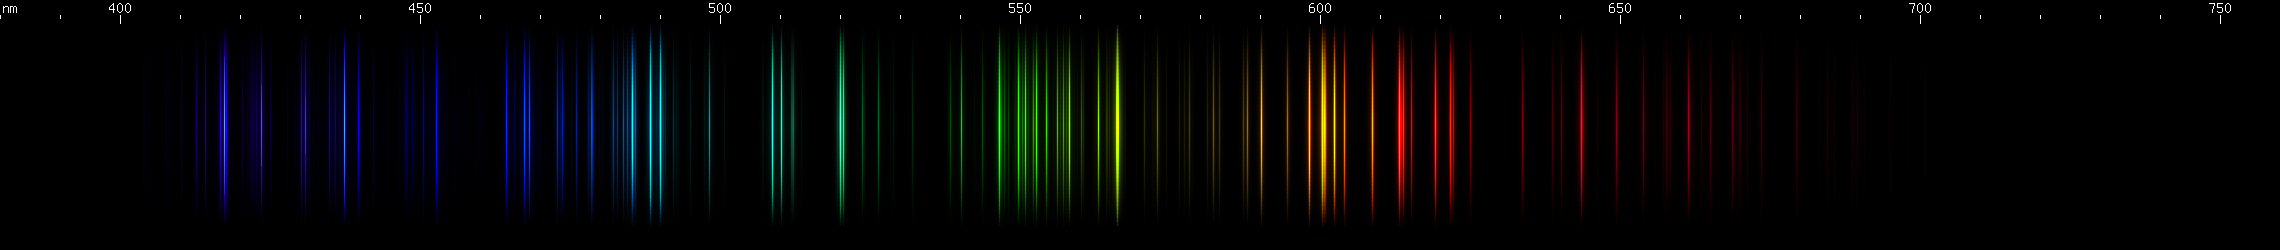 Spectral lines of Yttrium.